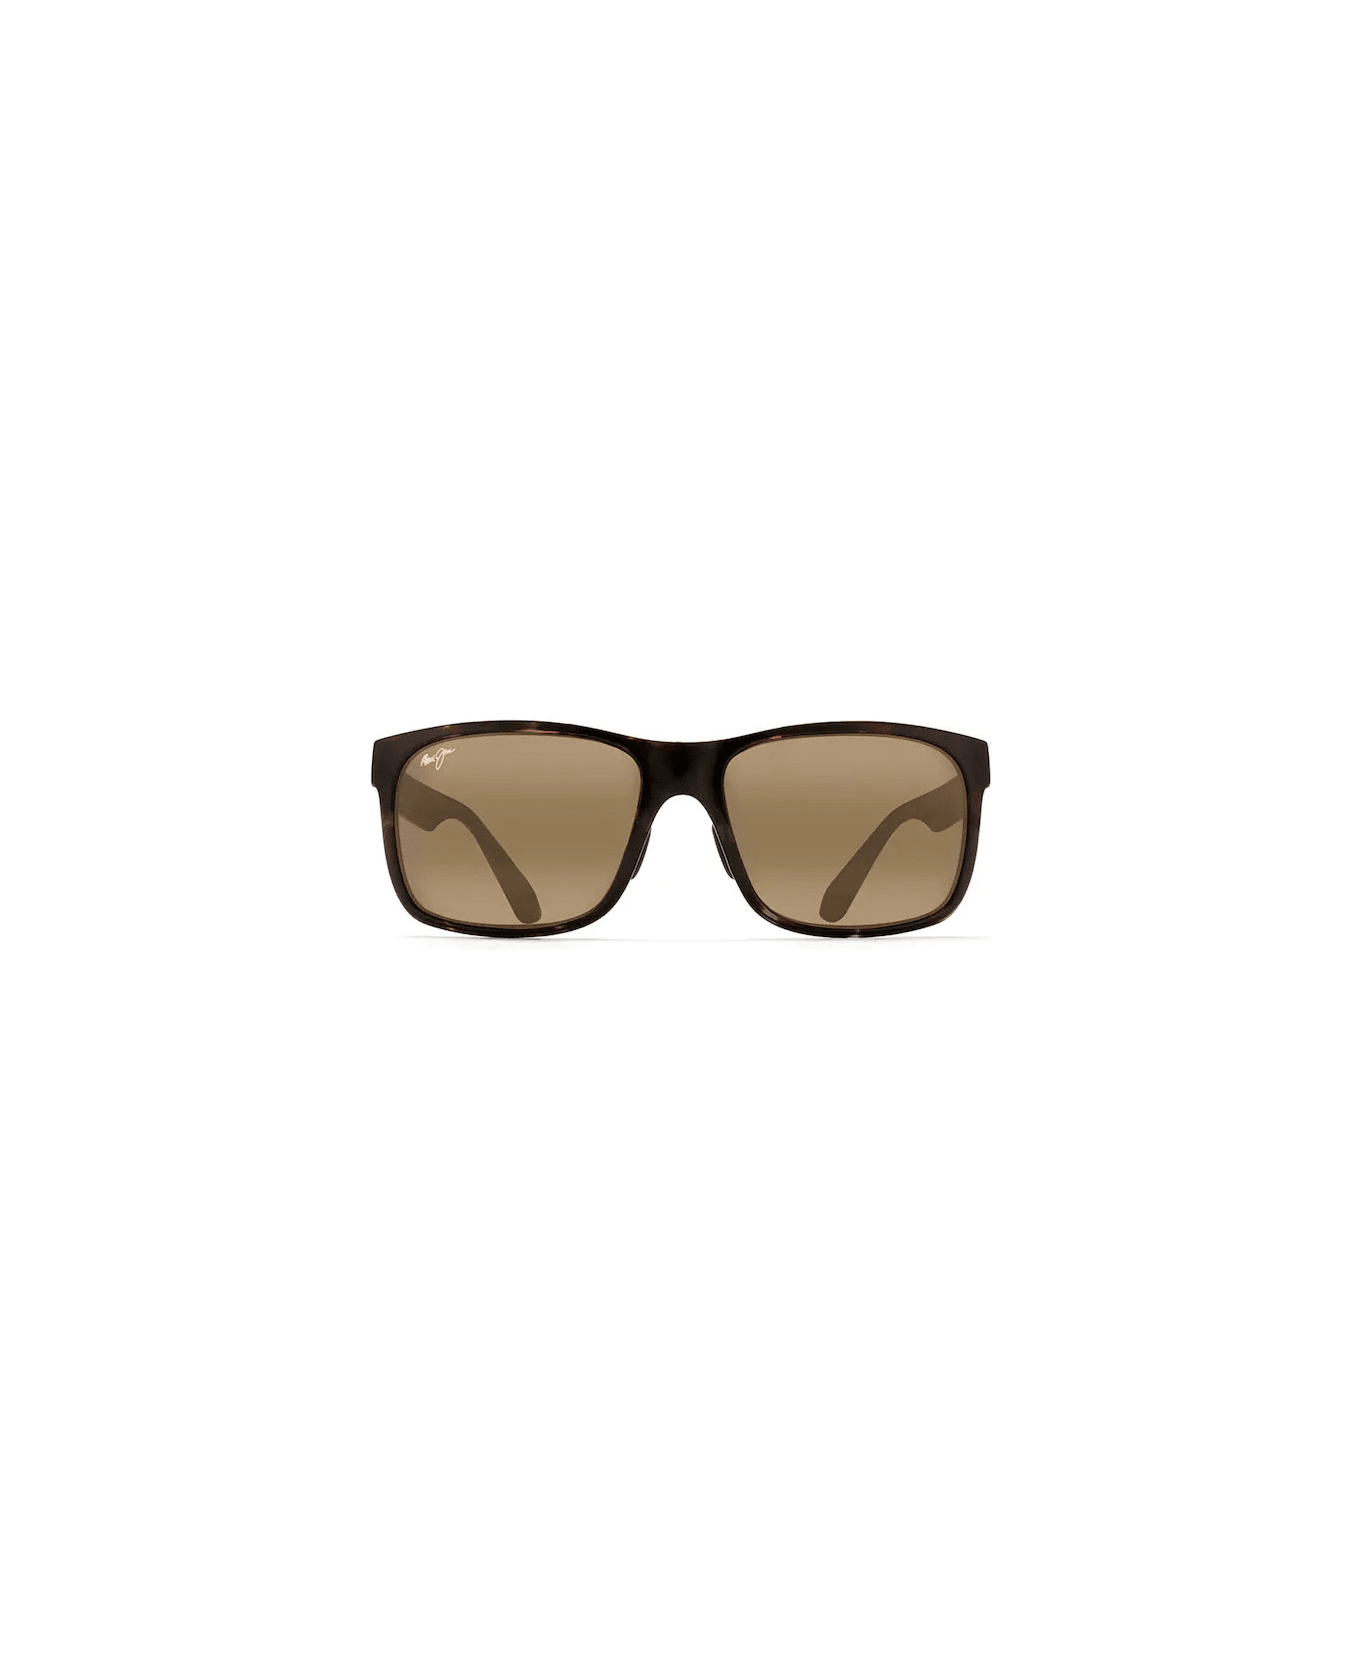 Maui Jim Red sands H432-11T Sunglasses - Tartarugato grigio